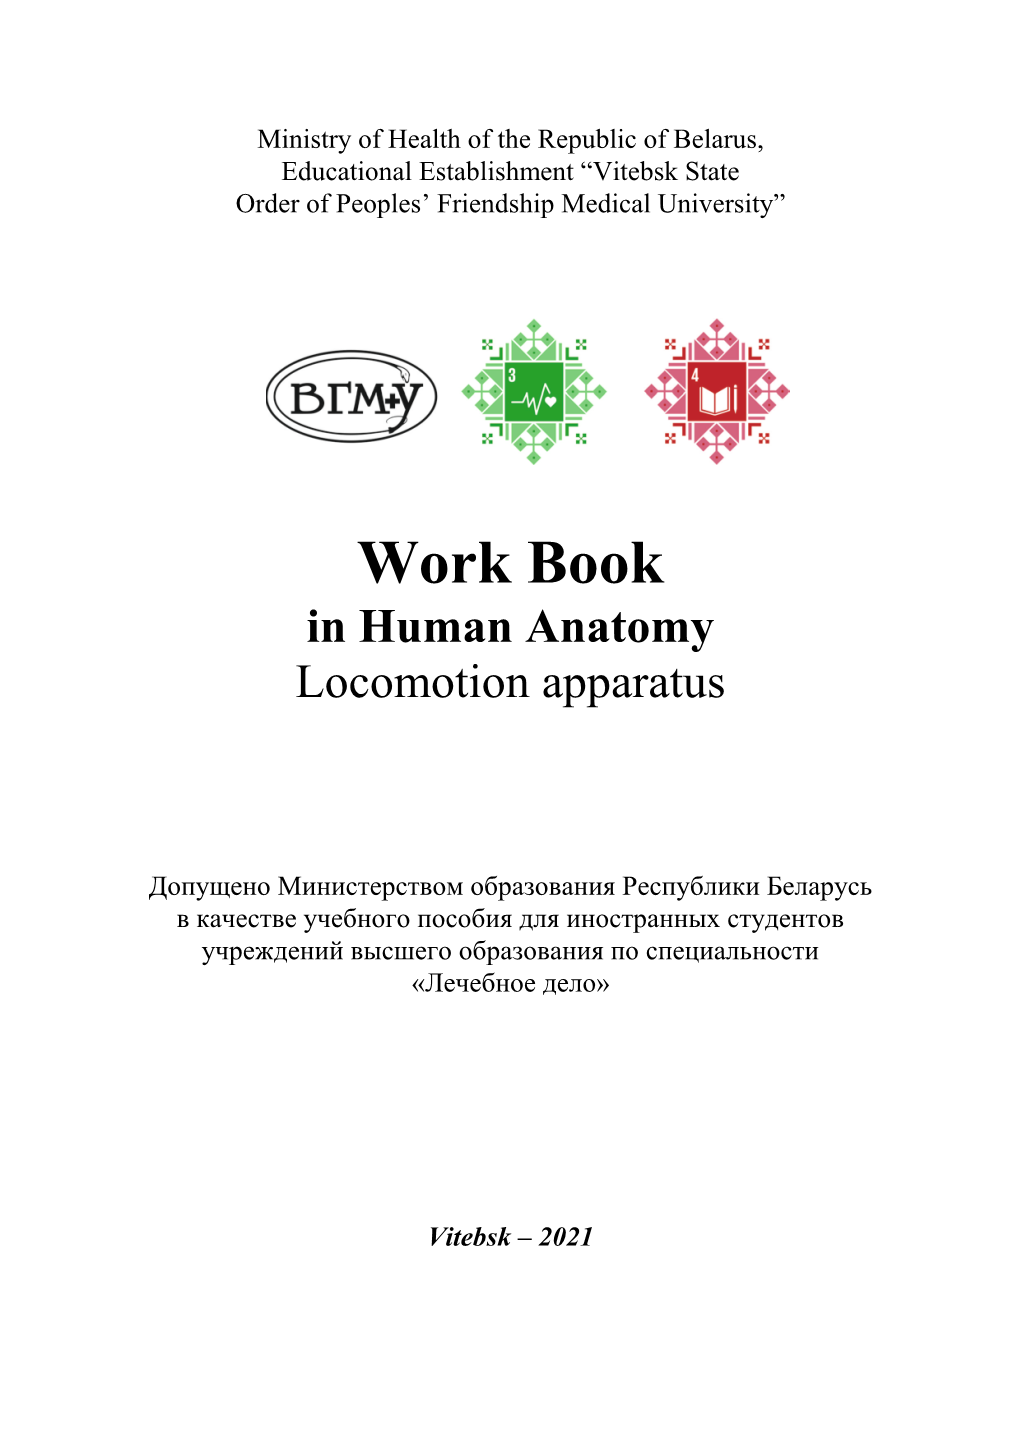 Work Book in Нuman Anatomy Locomotion Apparatus